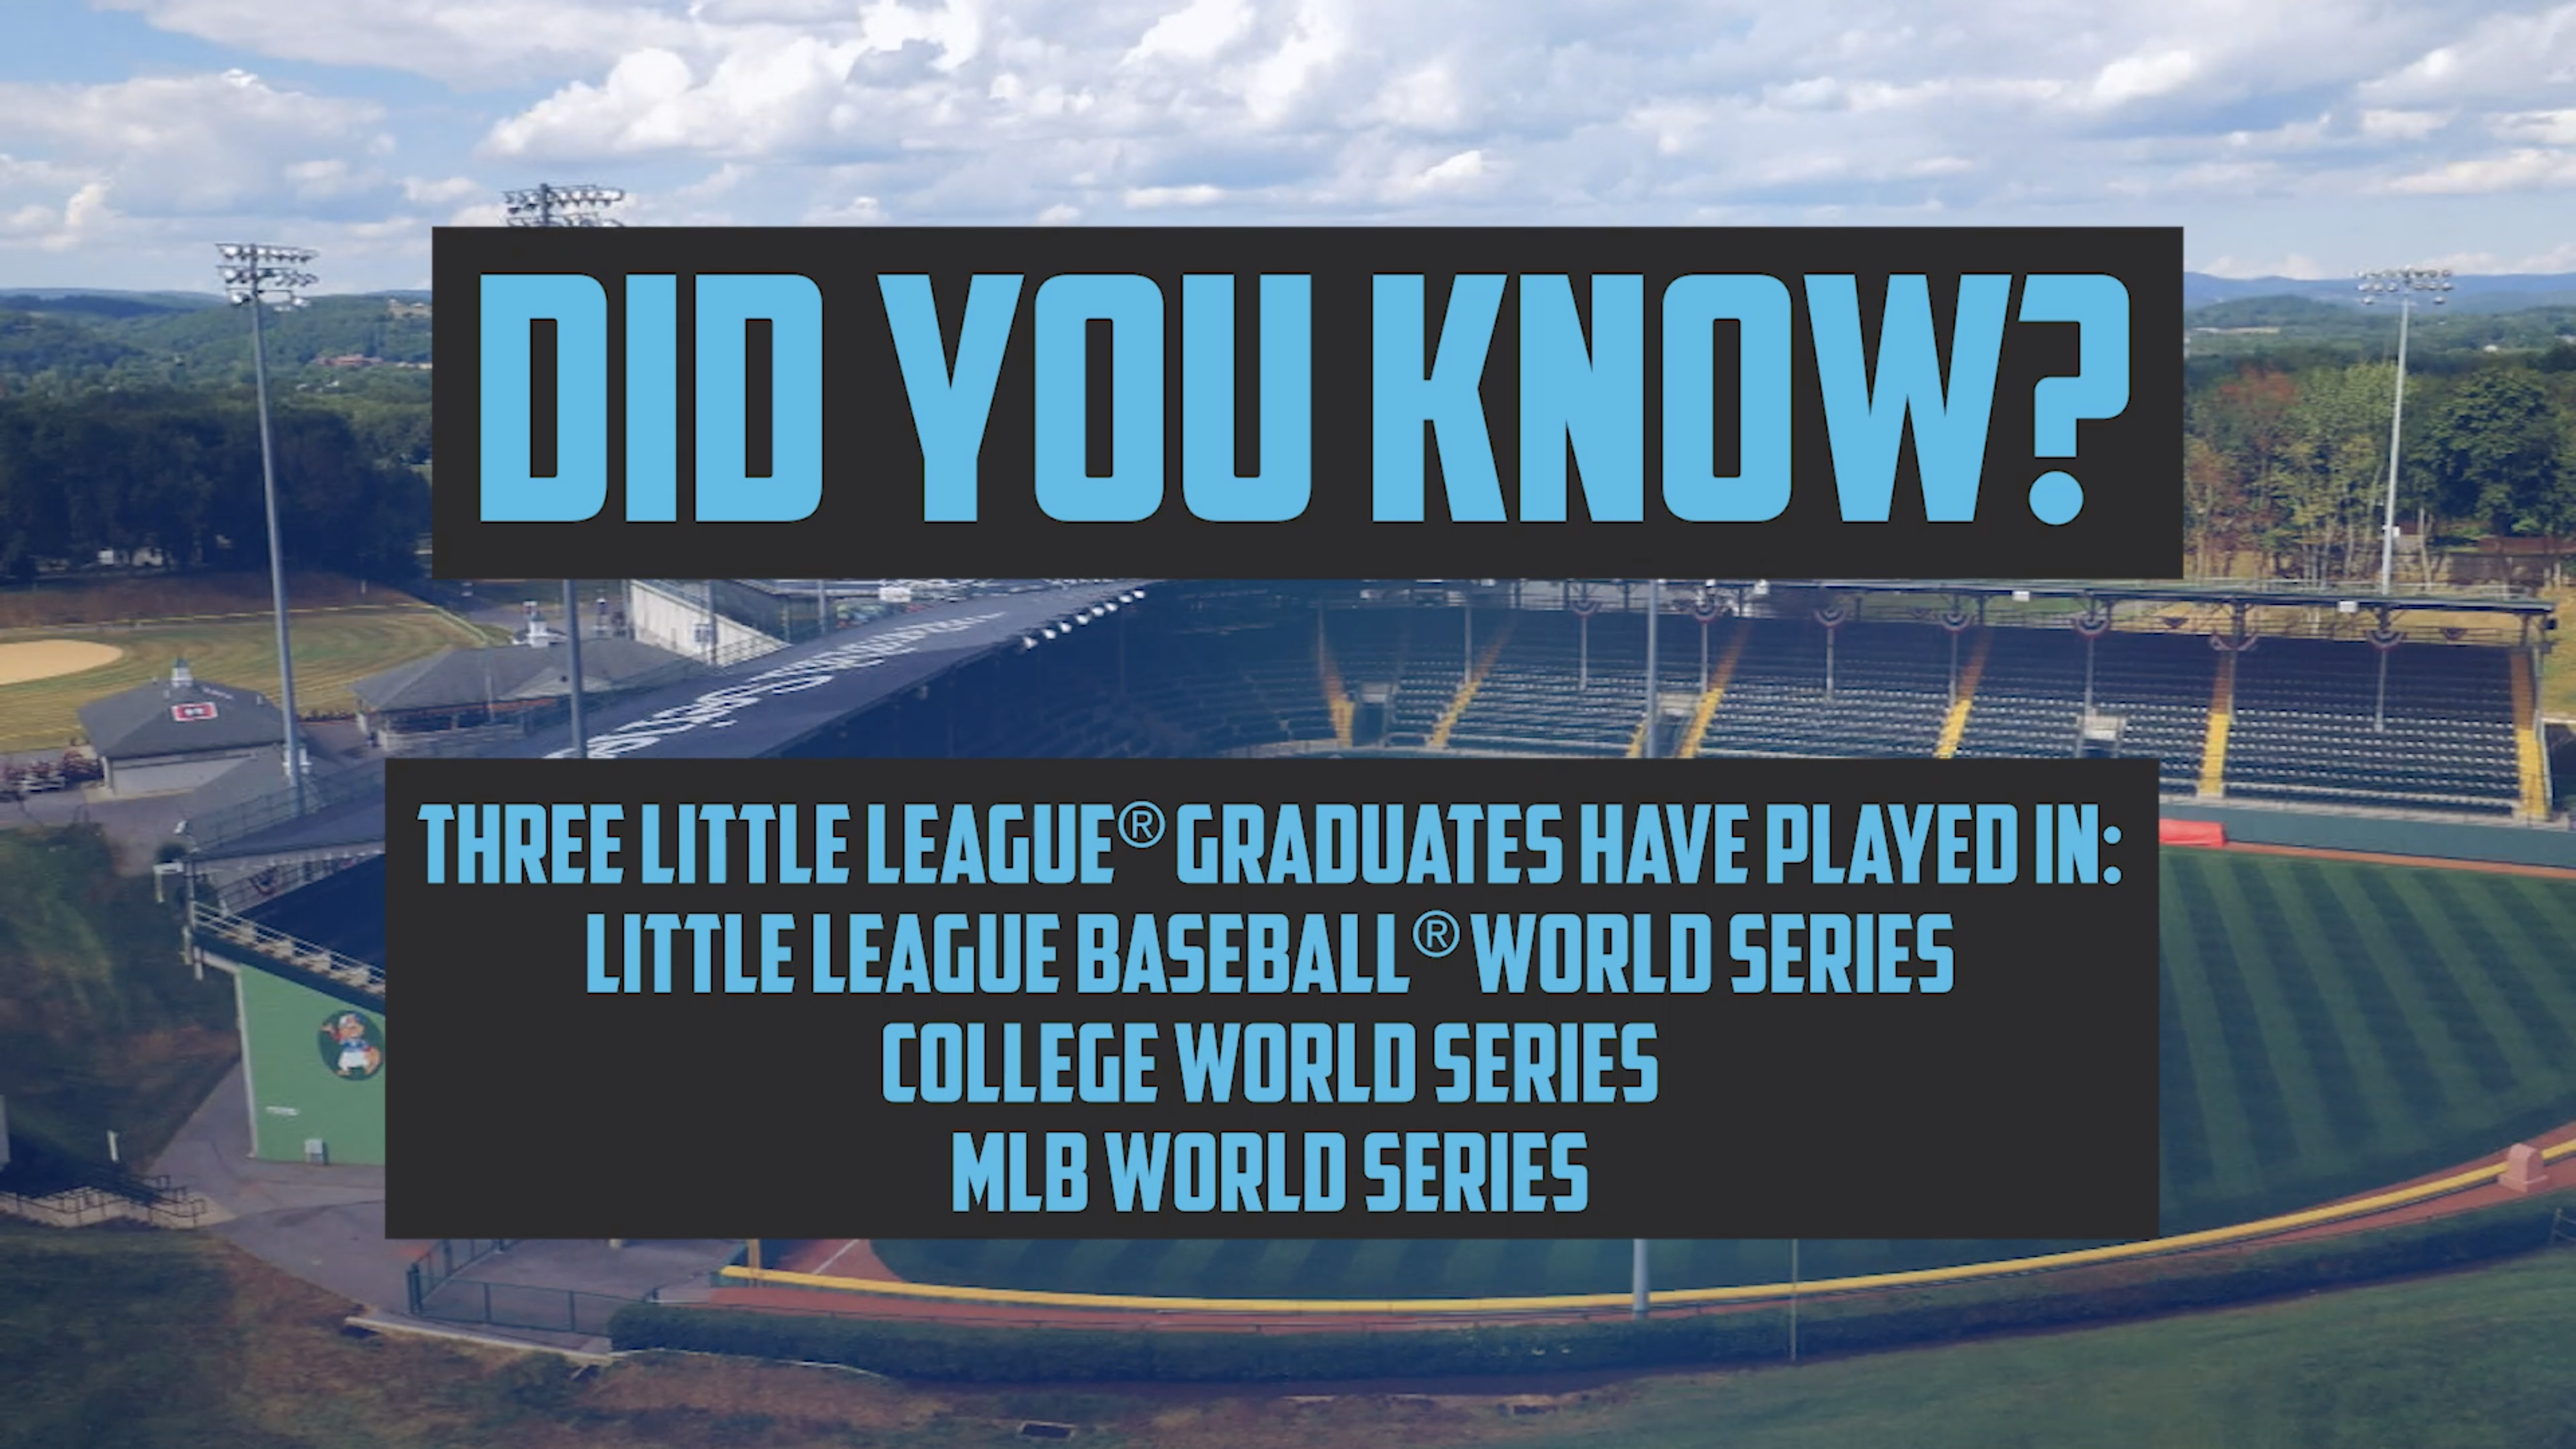 From Little League World Series to Major League Baseball, Randal